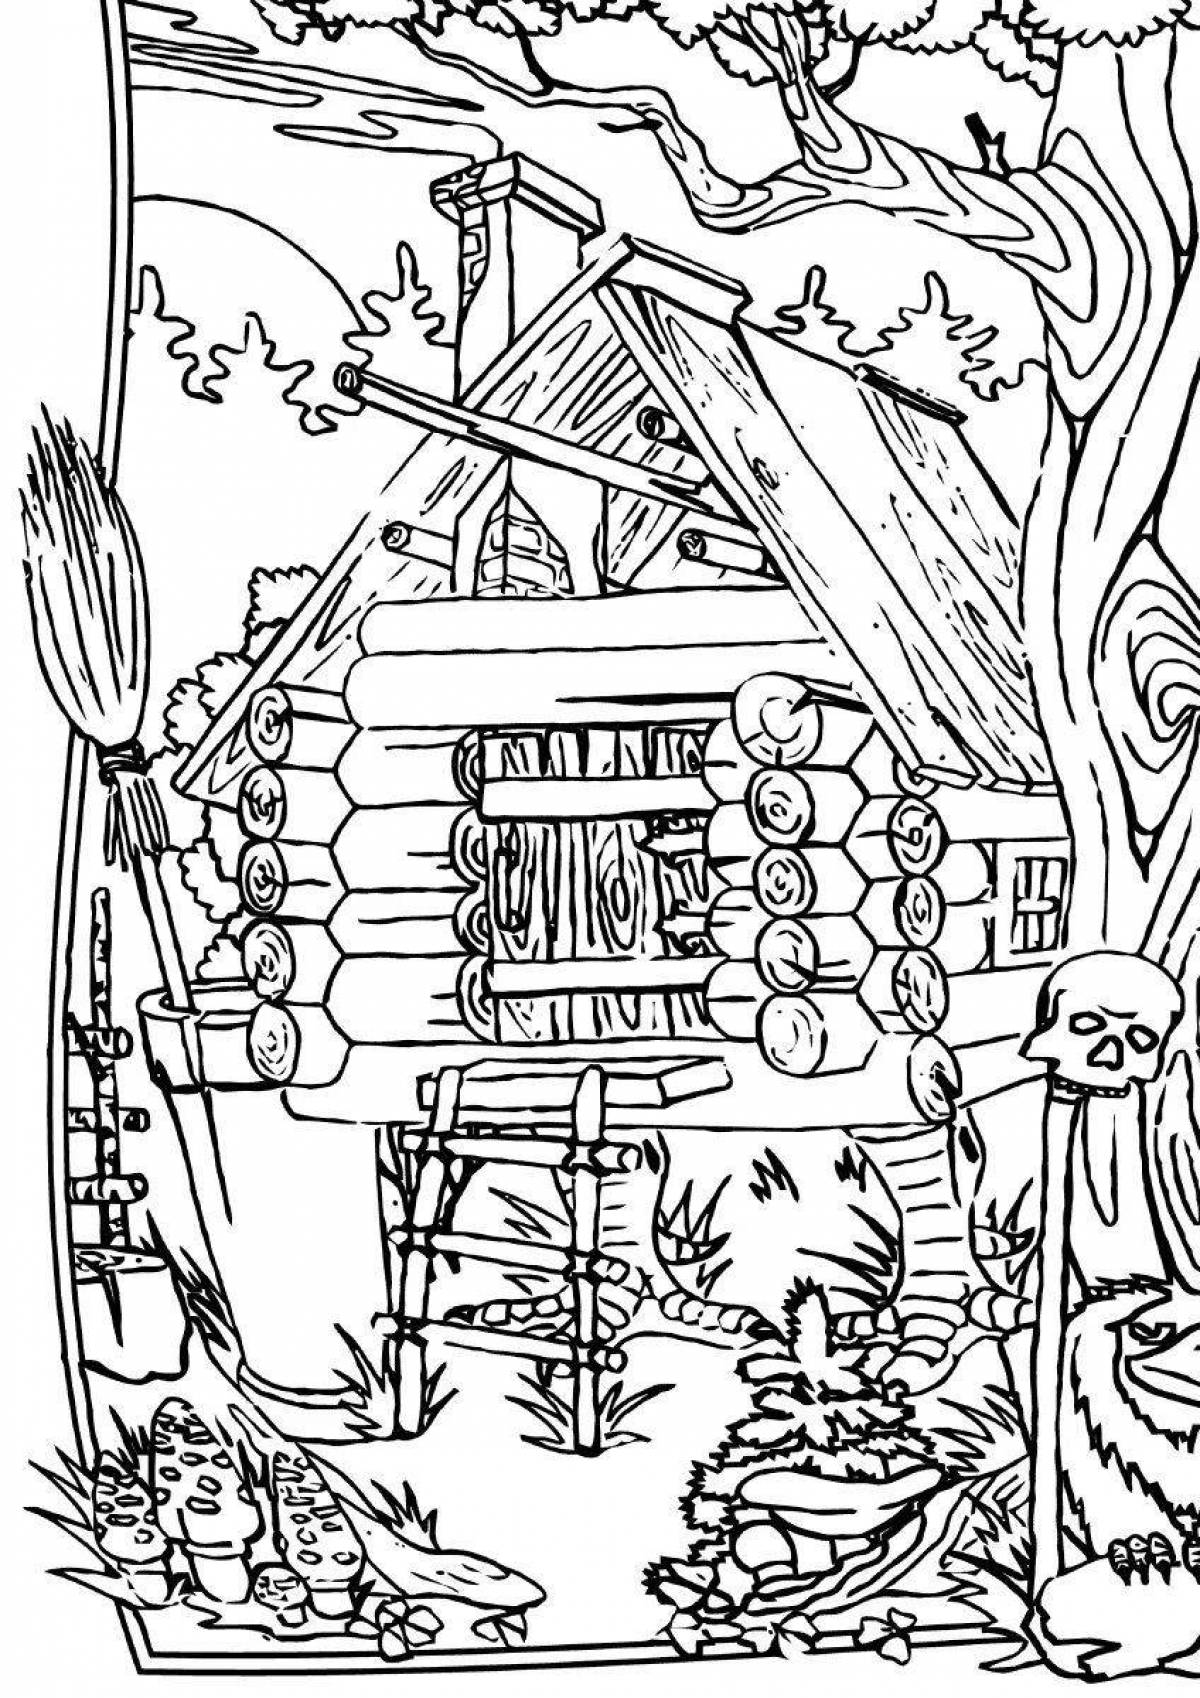 Coloring book mystical hut of baba yaga